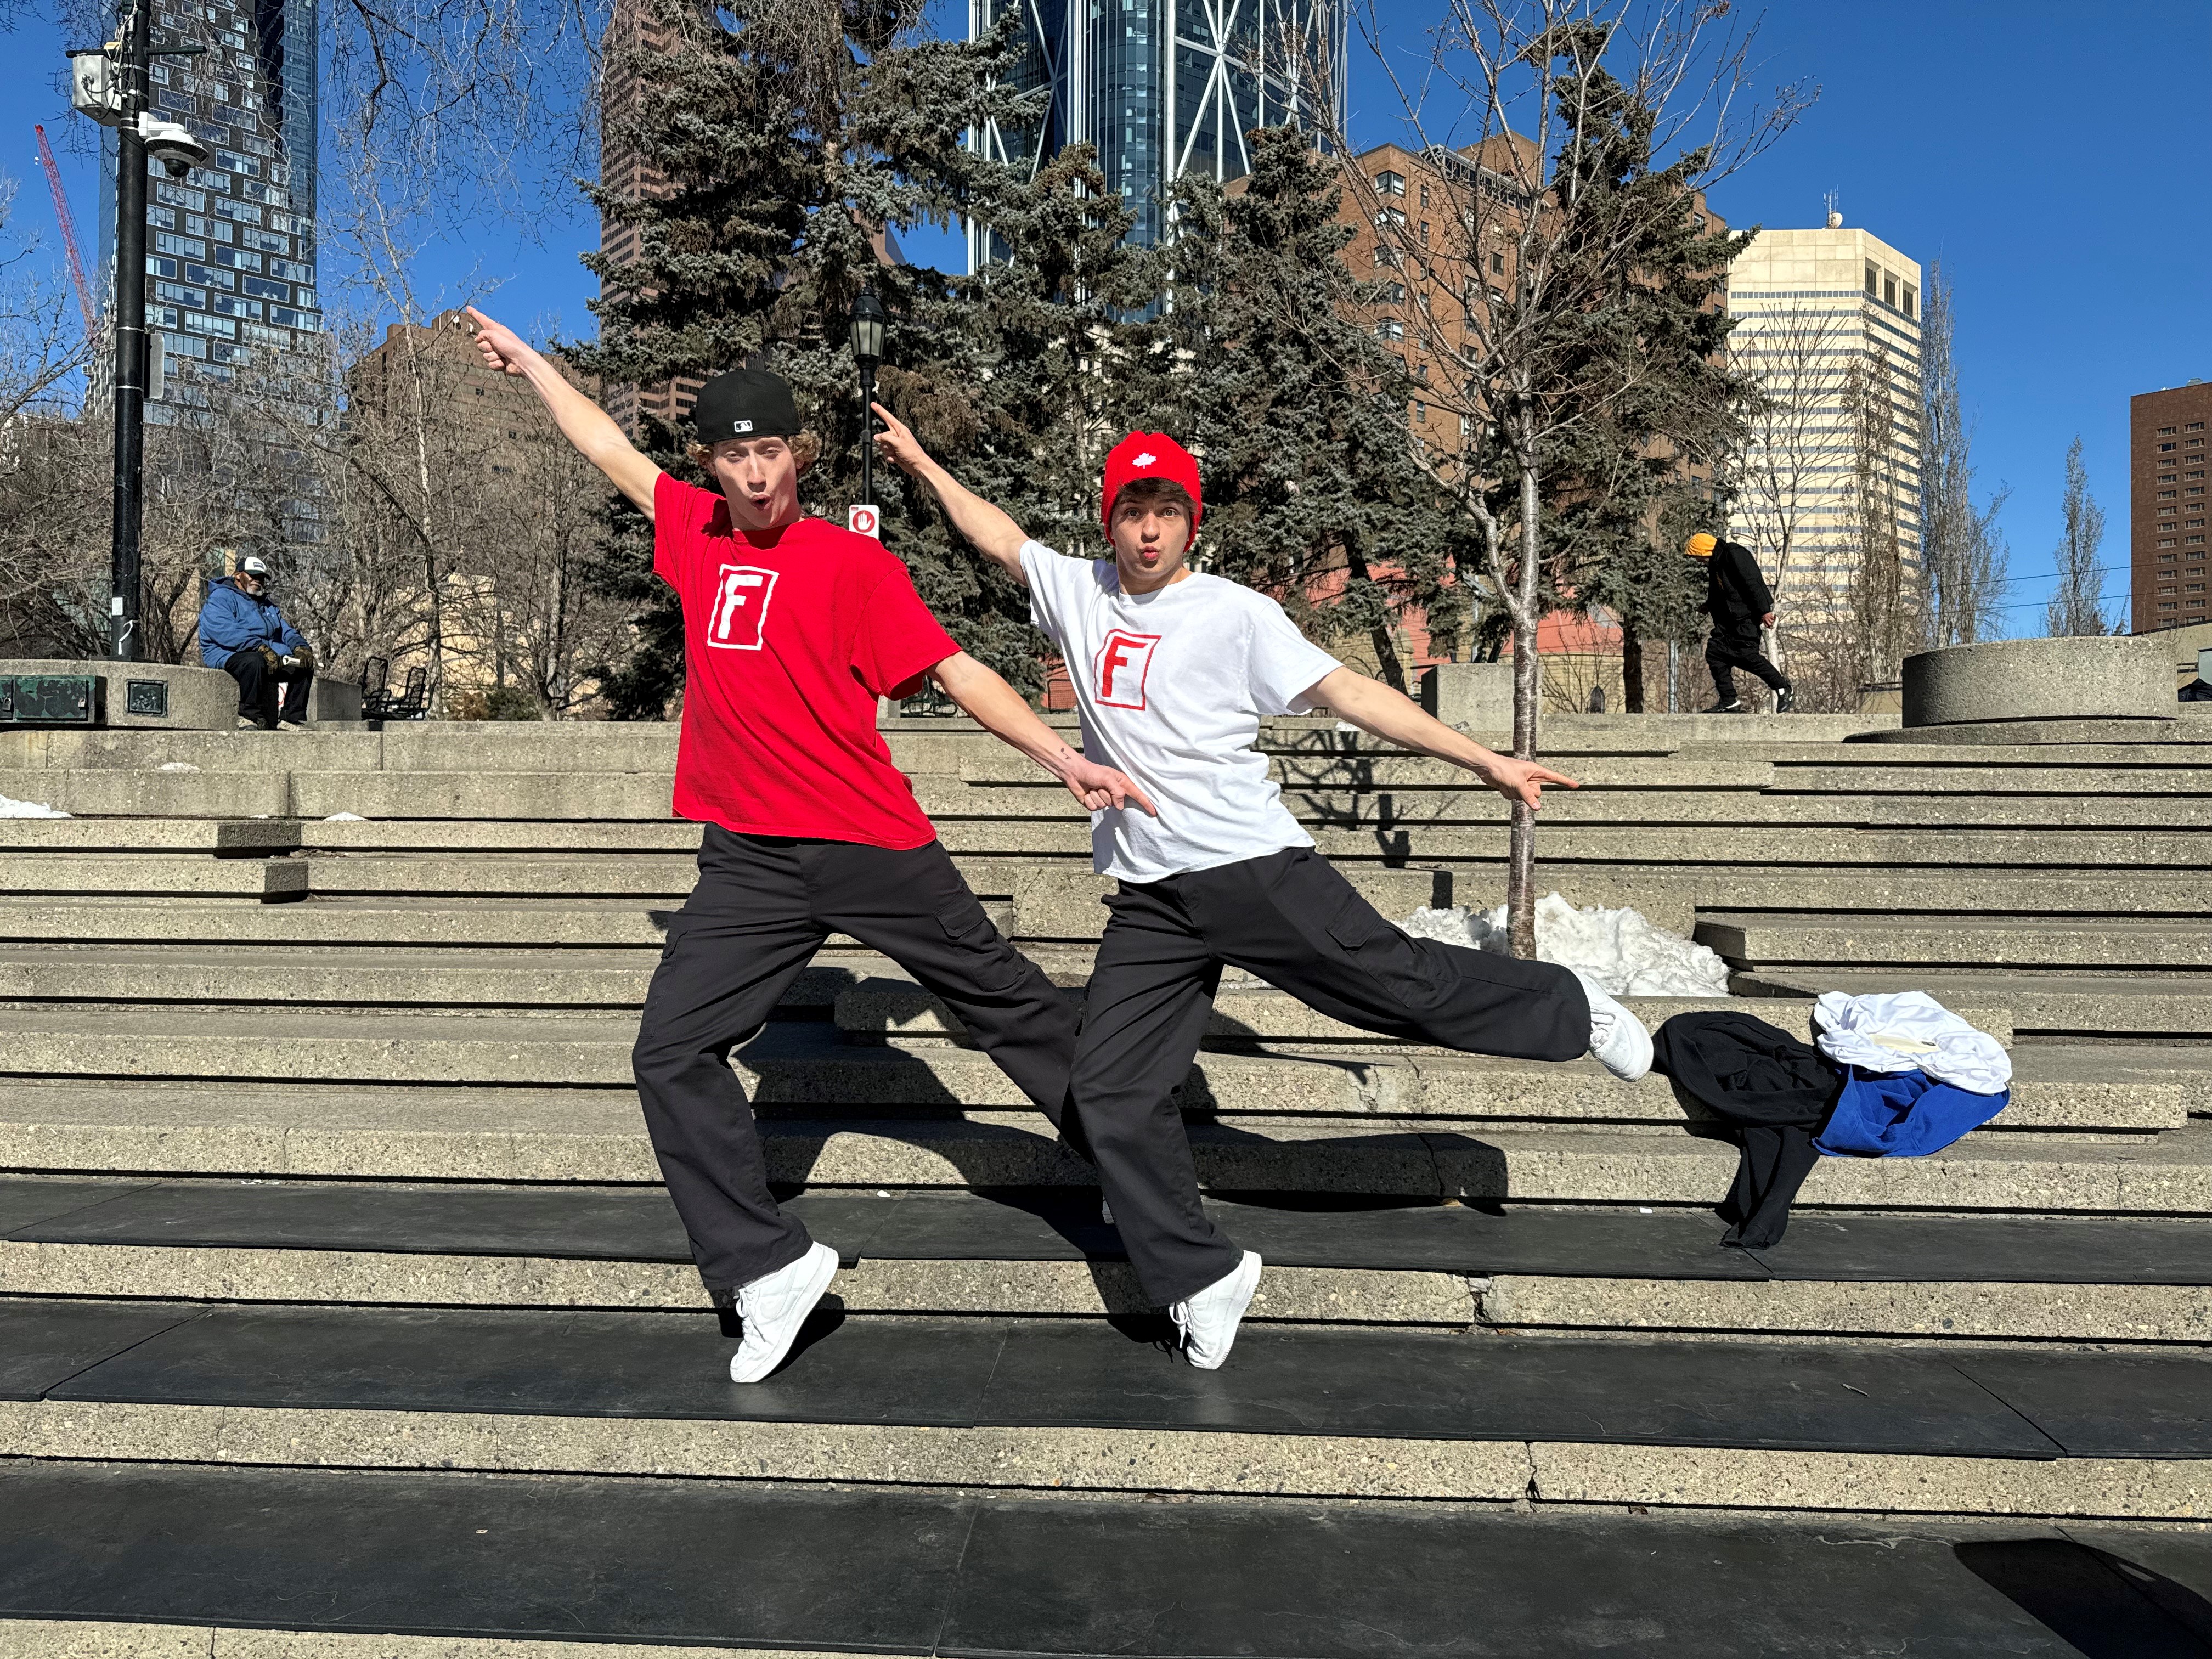 Funkanometry takes dance journey across Canada